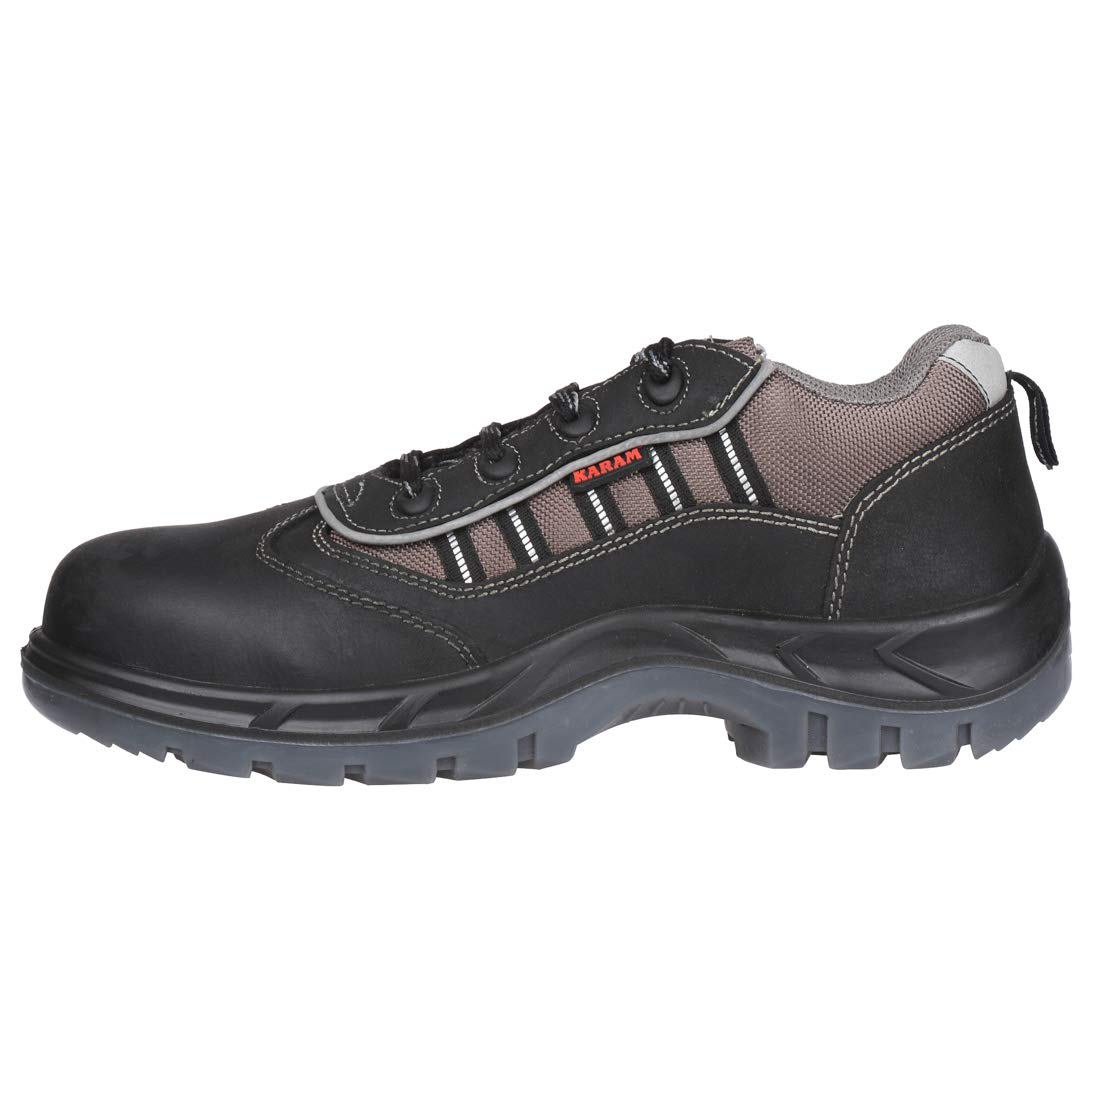 KARAM ISI Marked Leather Safety Shoe | Excellent Grip, Comfort & Slip Resistance | Safety Shoes for Men with Fiber Toe | Double Density & PU Sole | Black | FS62BL(FWDAMN)